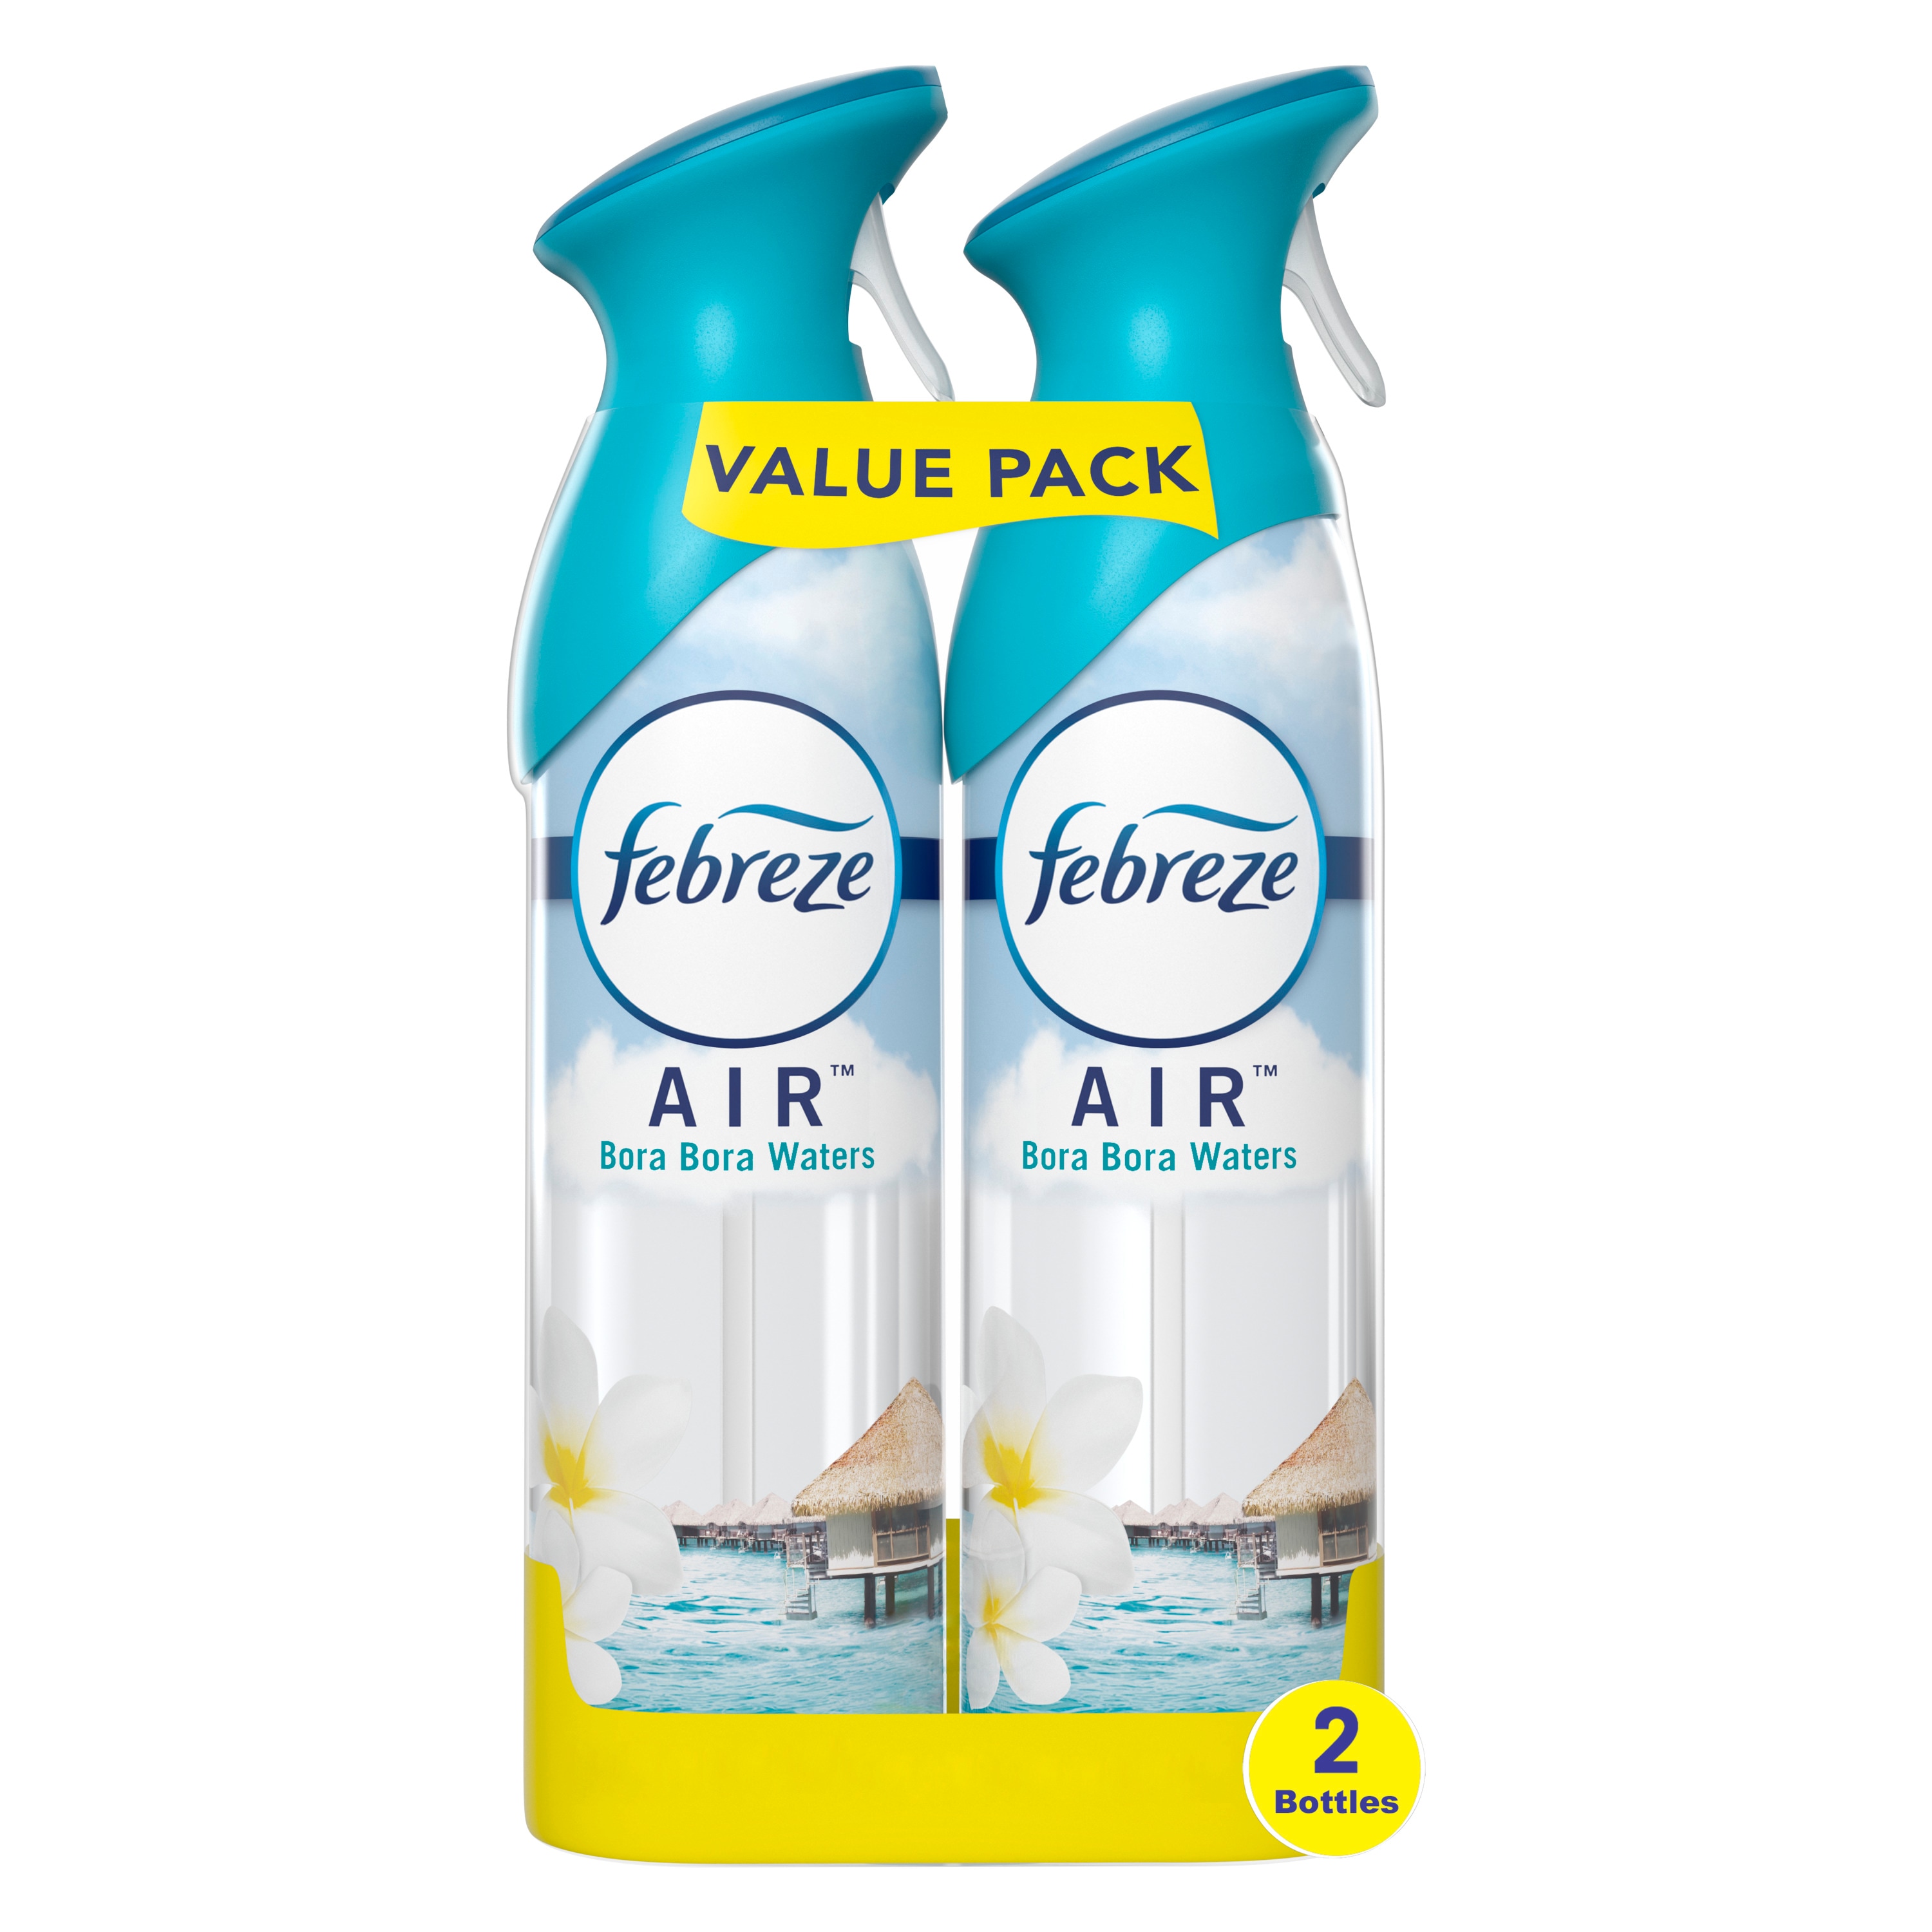 Febreze Air Air Refresher, Bora Bora Waters, Value Pack - 2 pack, 8.8 oz bottles